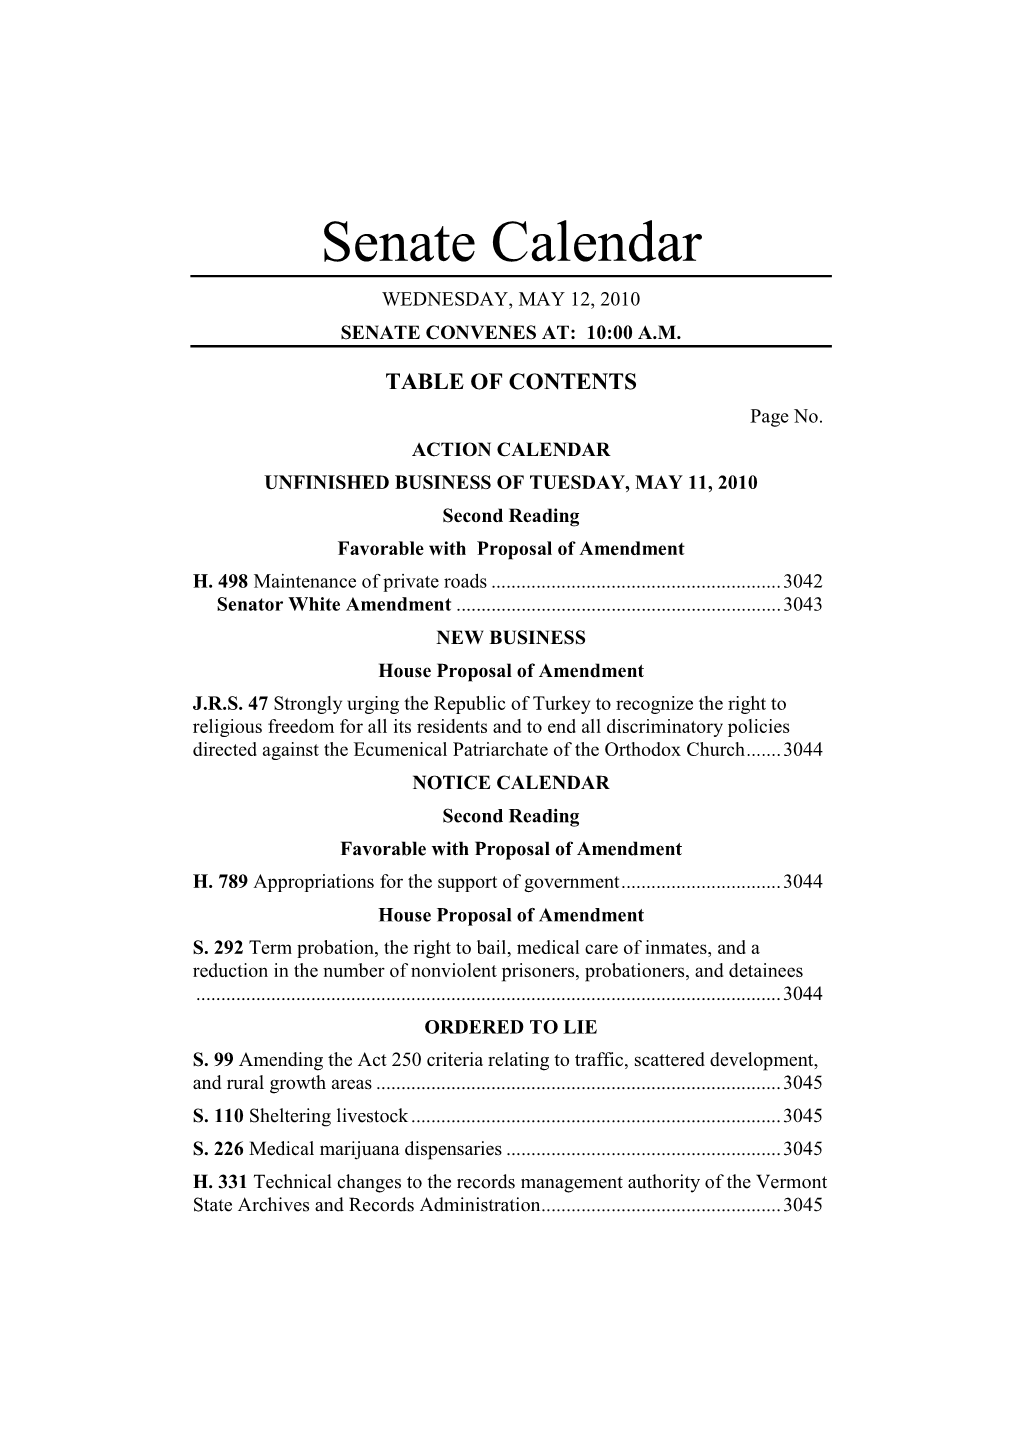 Senate Calendar WEDNESDAY, MAY 12, 2010 SENATE CONVENES AT: 10:00 A.M